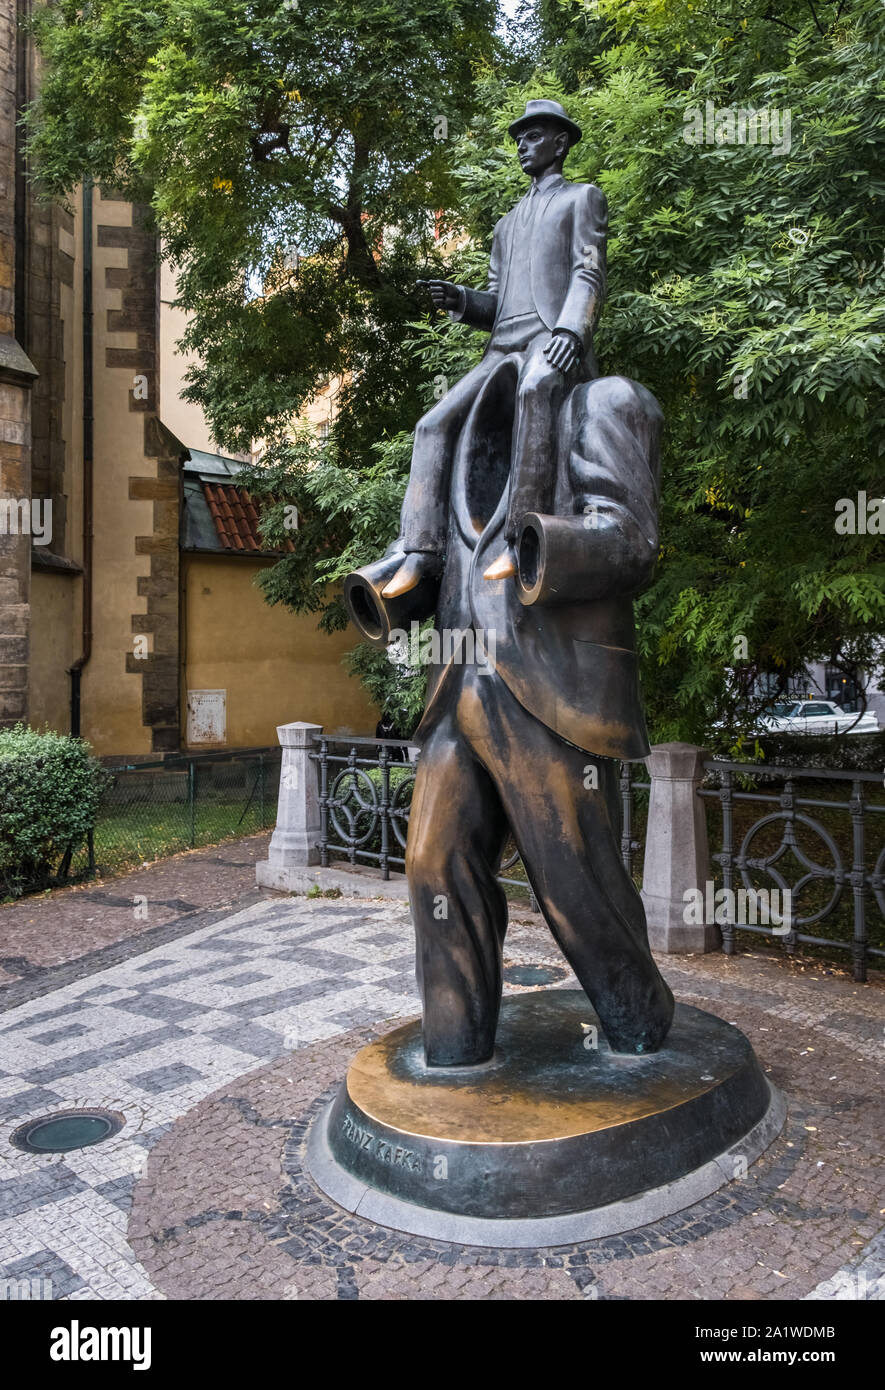 Memorial statue to Czech author Franz Kafka, depicted as riding on  shoulders of a headless figure, Vězeňská Street, Jewish Quarter, Prague, Czechia. Stock Photo